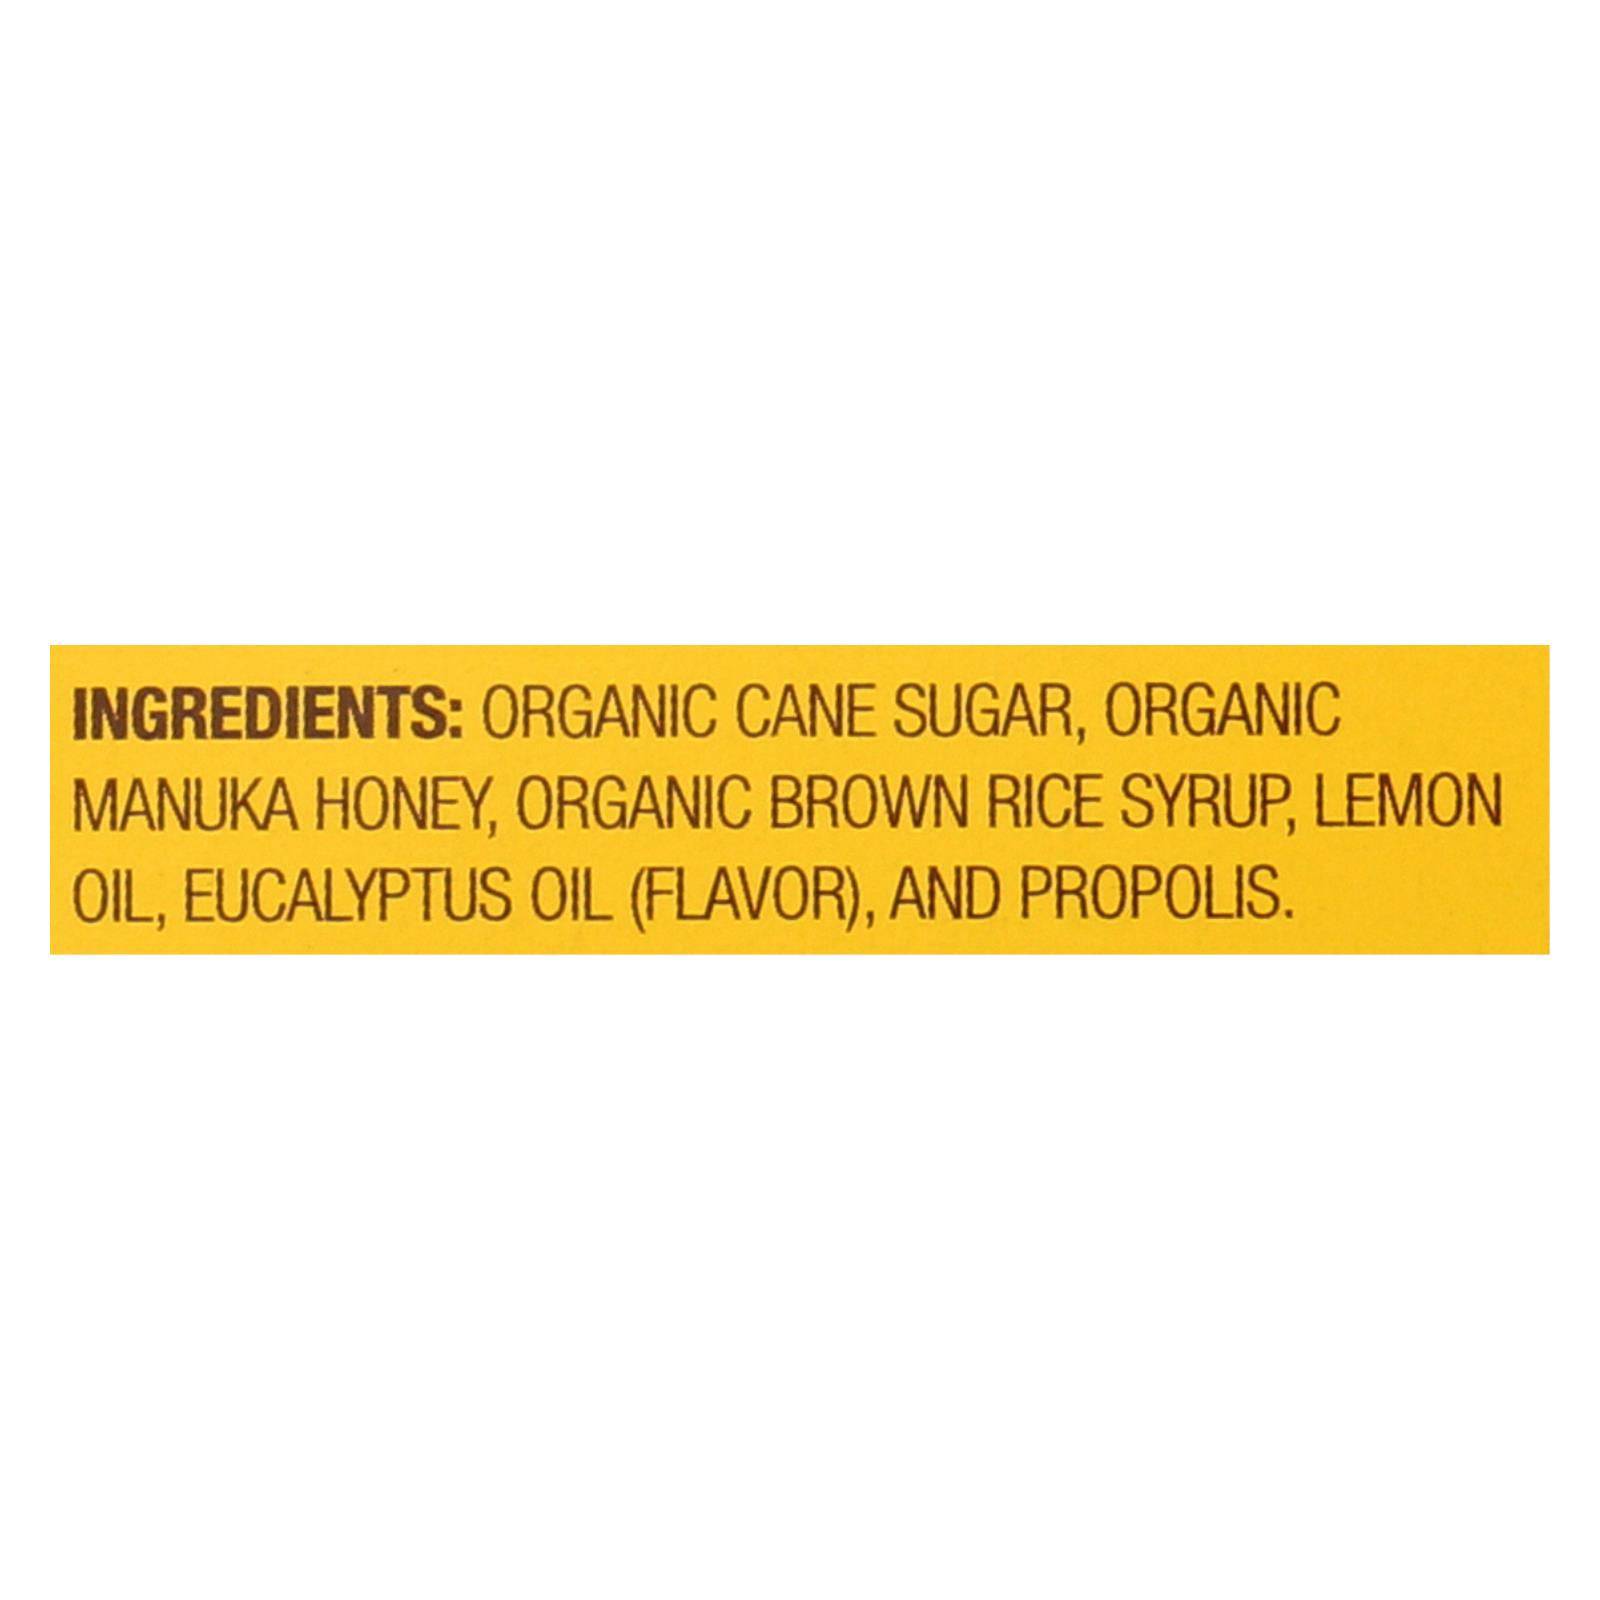 Buy Wedderspoon Drops - Organic - Manuka - 15+ - Lemon - 4 Oz  at OnlyNaturals.us